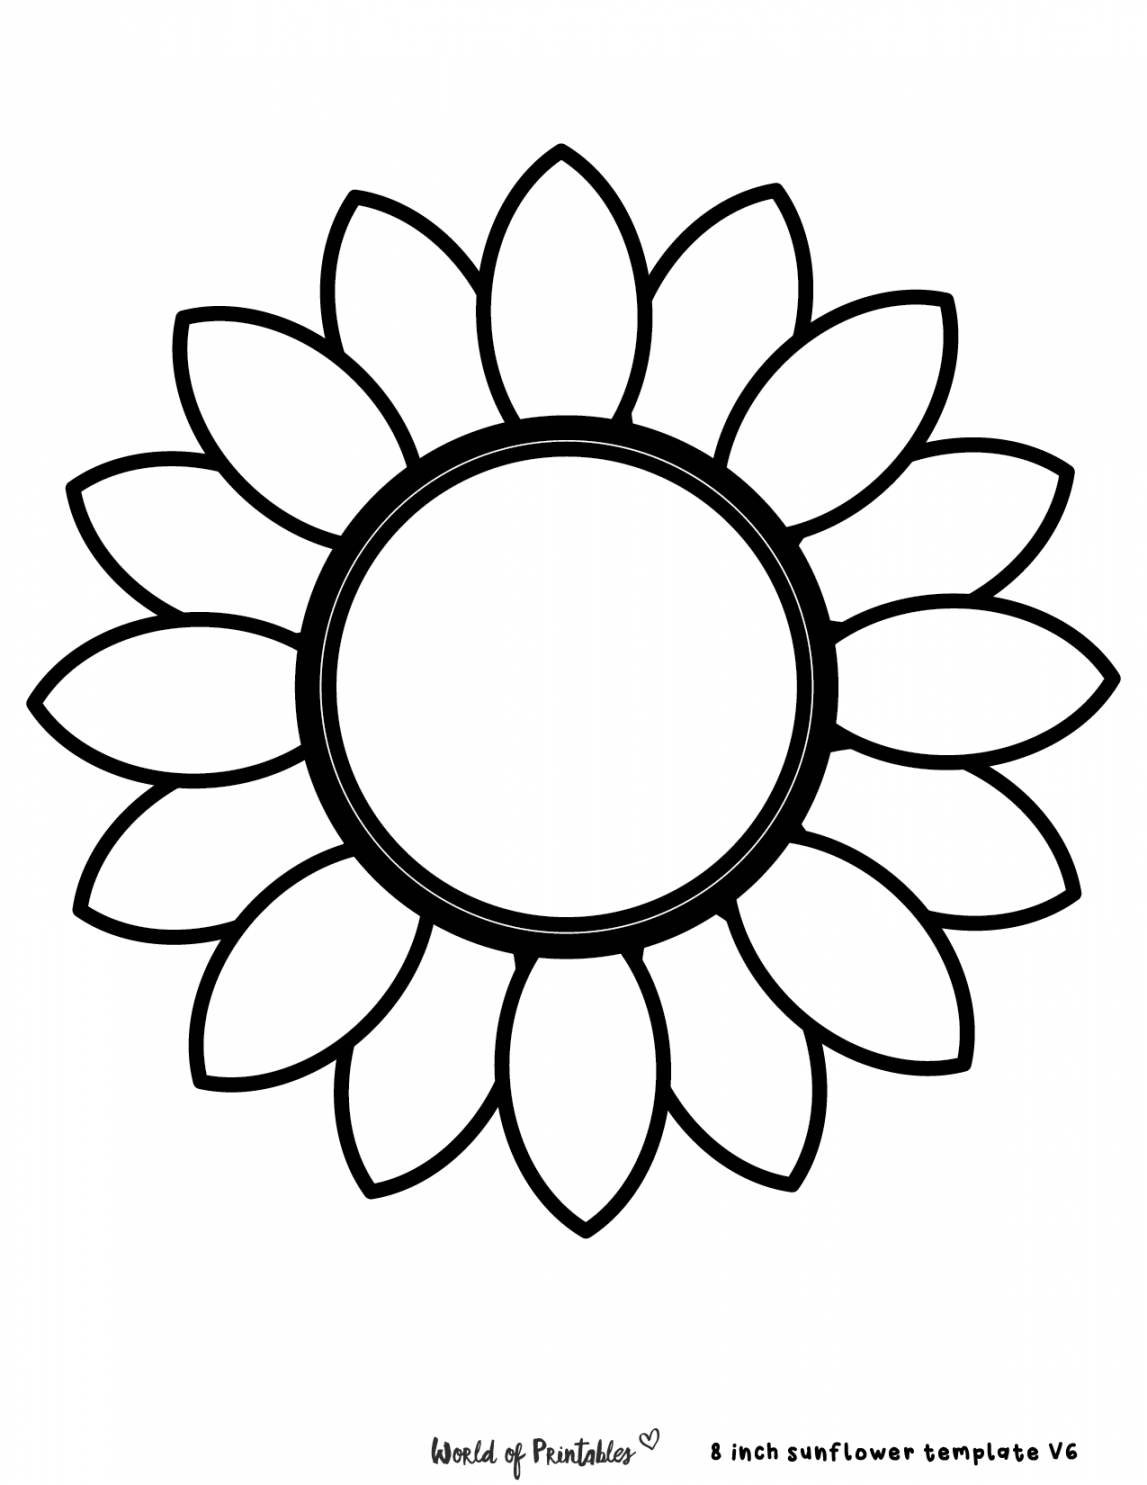 Best Sunflower Templates - World of Printables - FREE Printables - Sunflower Template